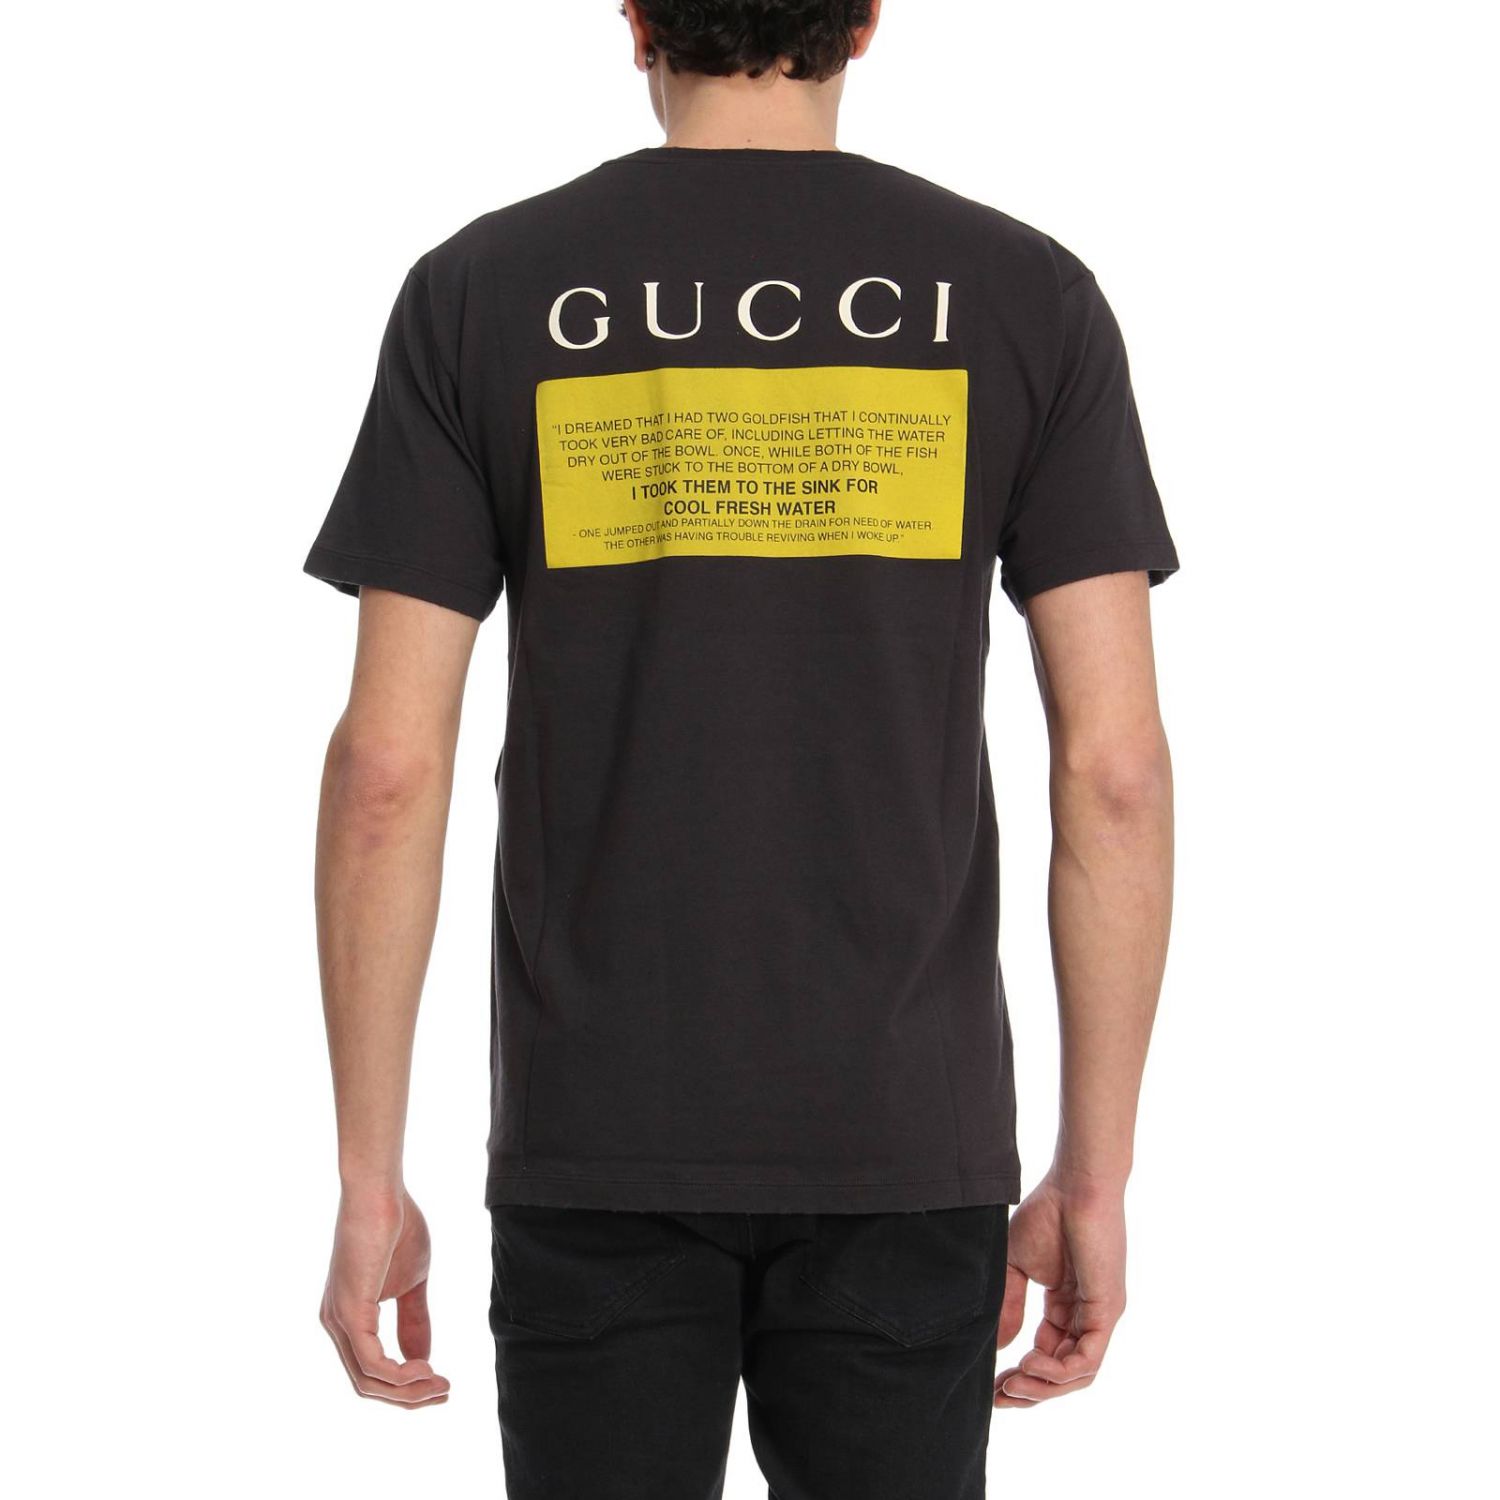 Gucci Goldfish Shirt 54 Off Newriversidehotel Com - roblox t shirt gucci 54 off newriversidehotel com